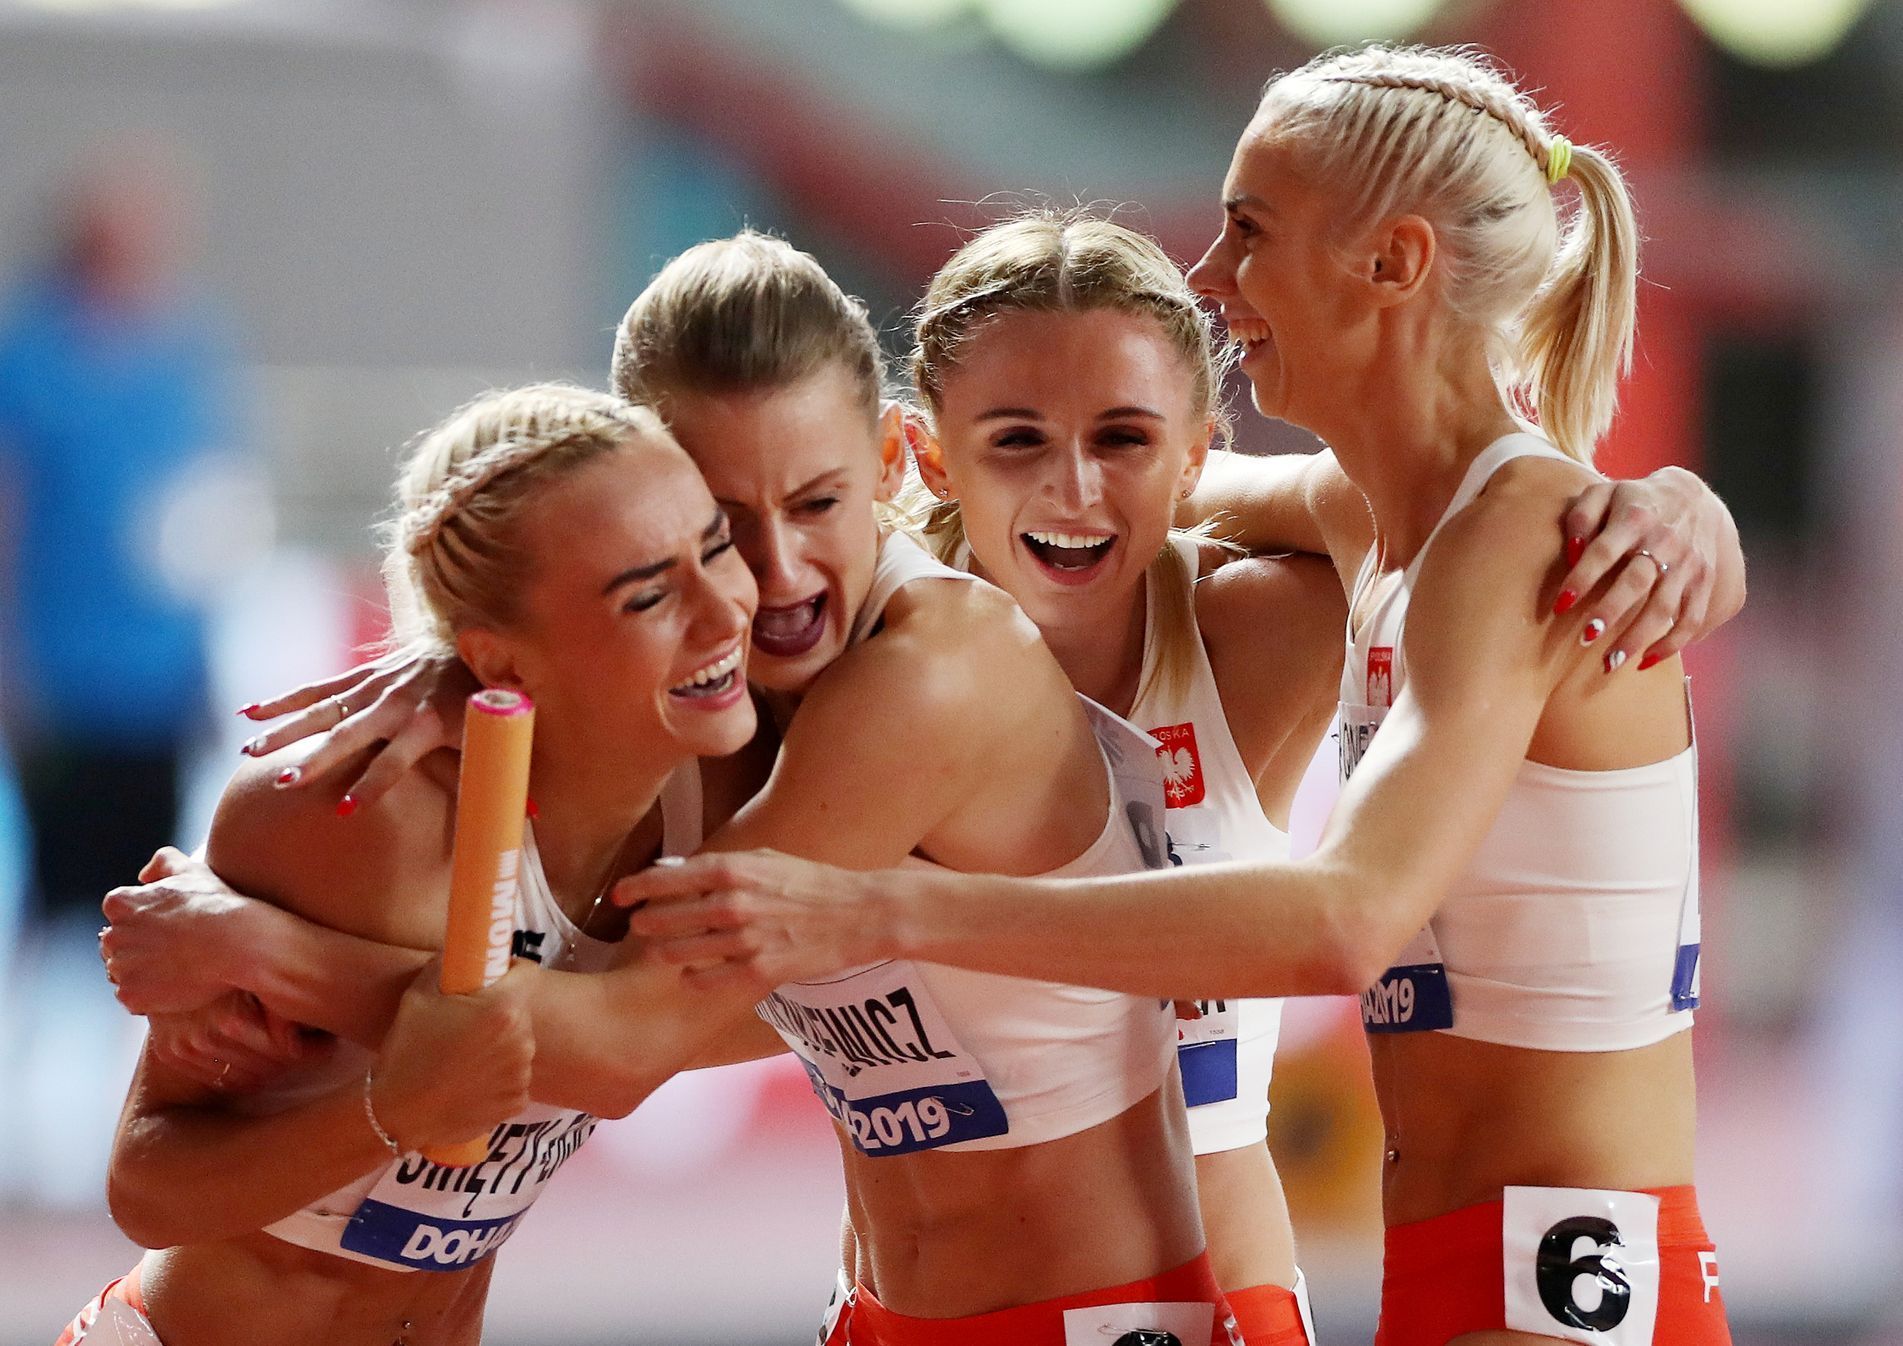 MS v atletice 2019: Polská štafeta na 4x400 metrů oslavuje stříbro